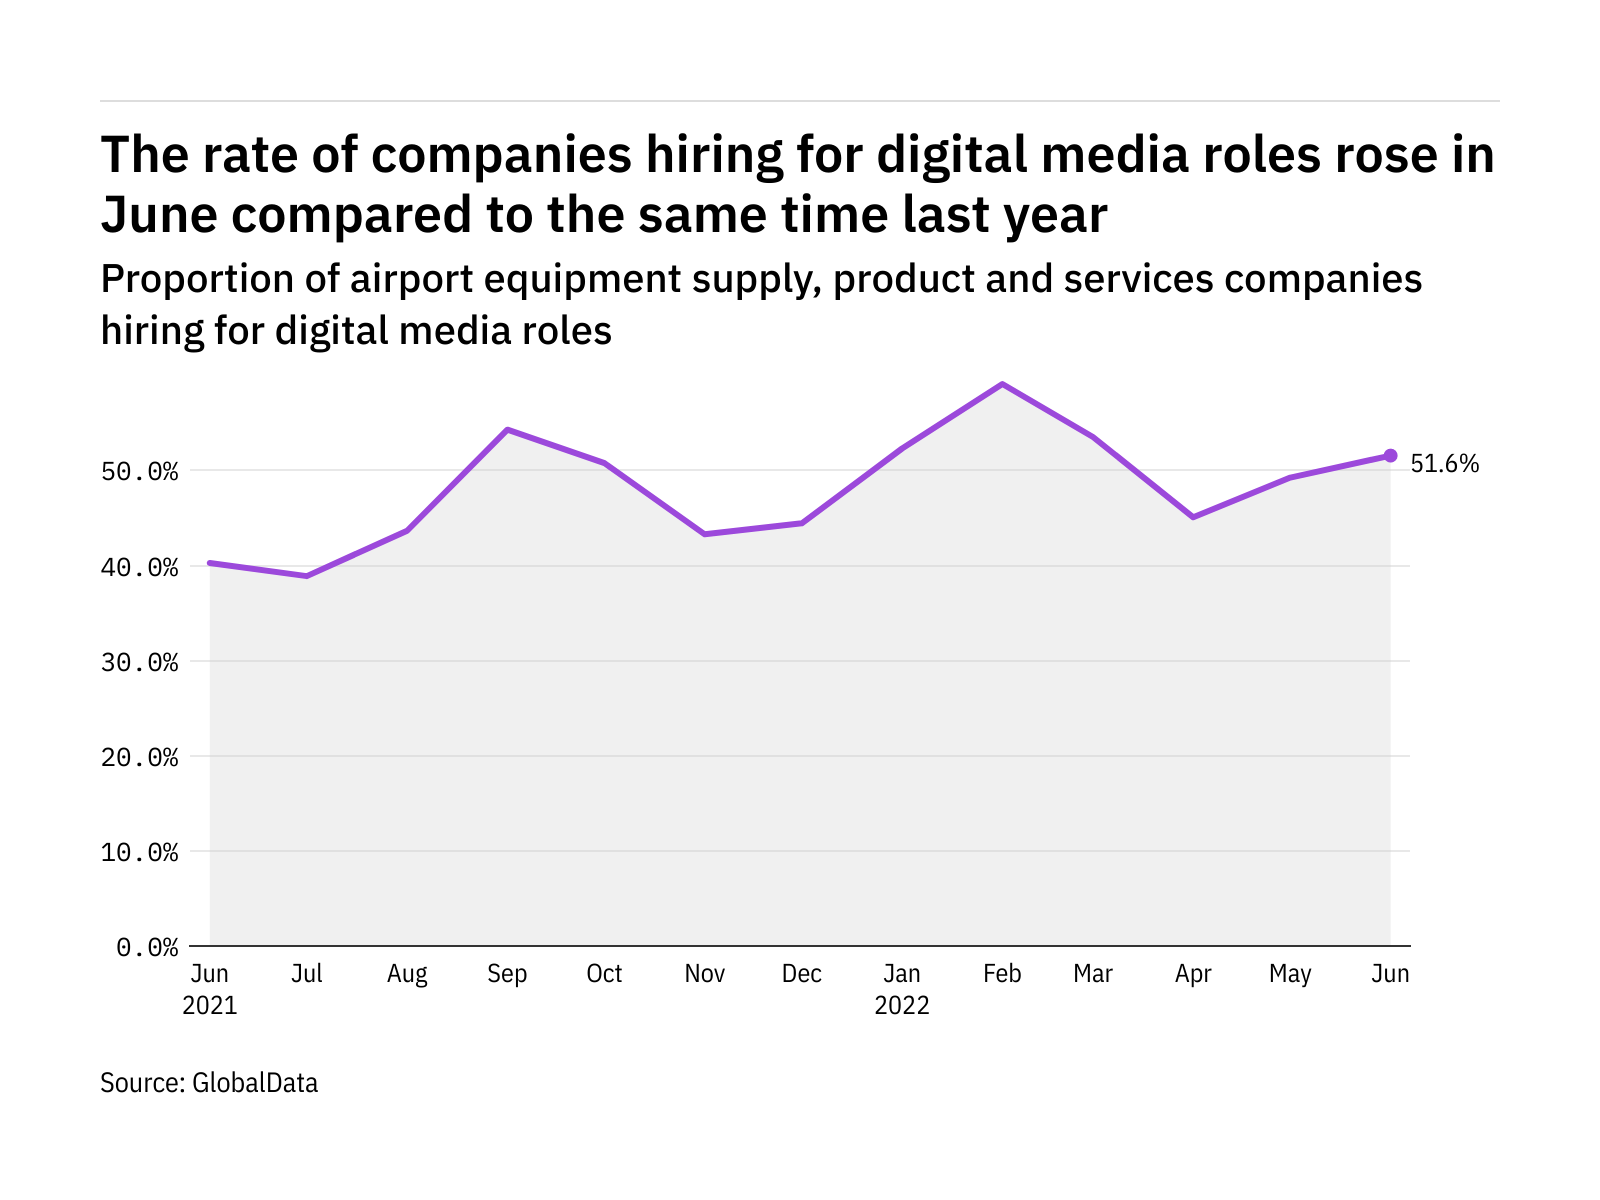 Digital media hiring levels in the airport industry rose in June 2022